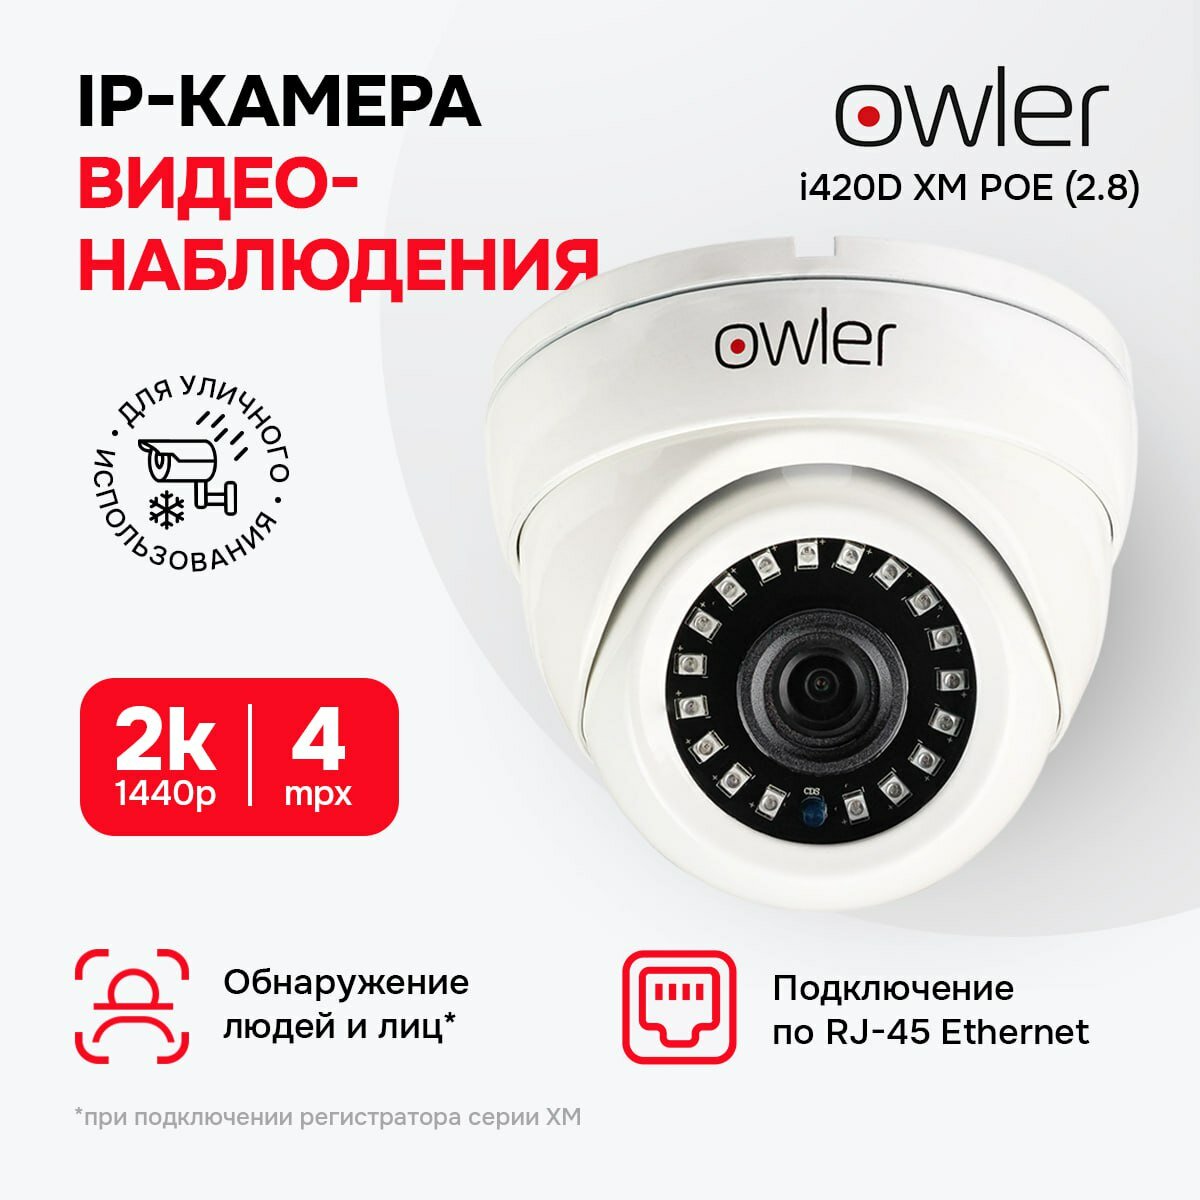 Камера видеонаблюдения IP Owler i420D XM POE (2.8) Уличная/4 Мп/Металлический купол/Ночная съемка/ Широкий угол обзора/